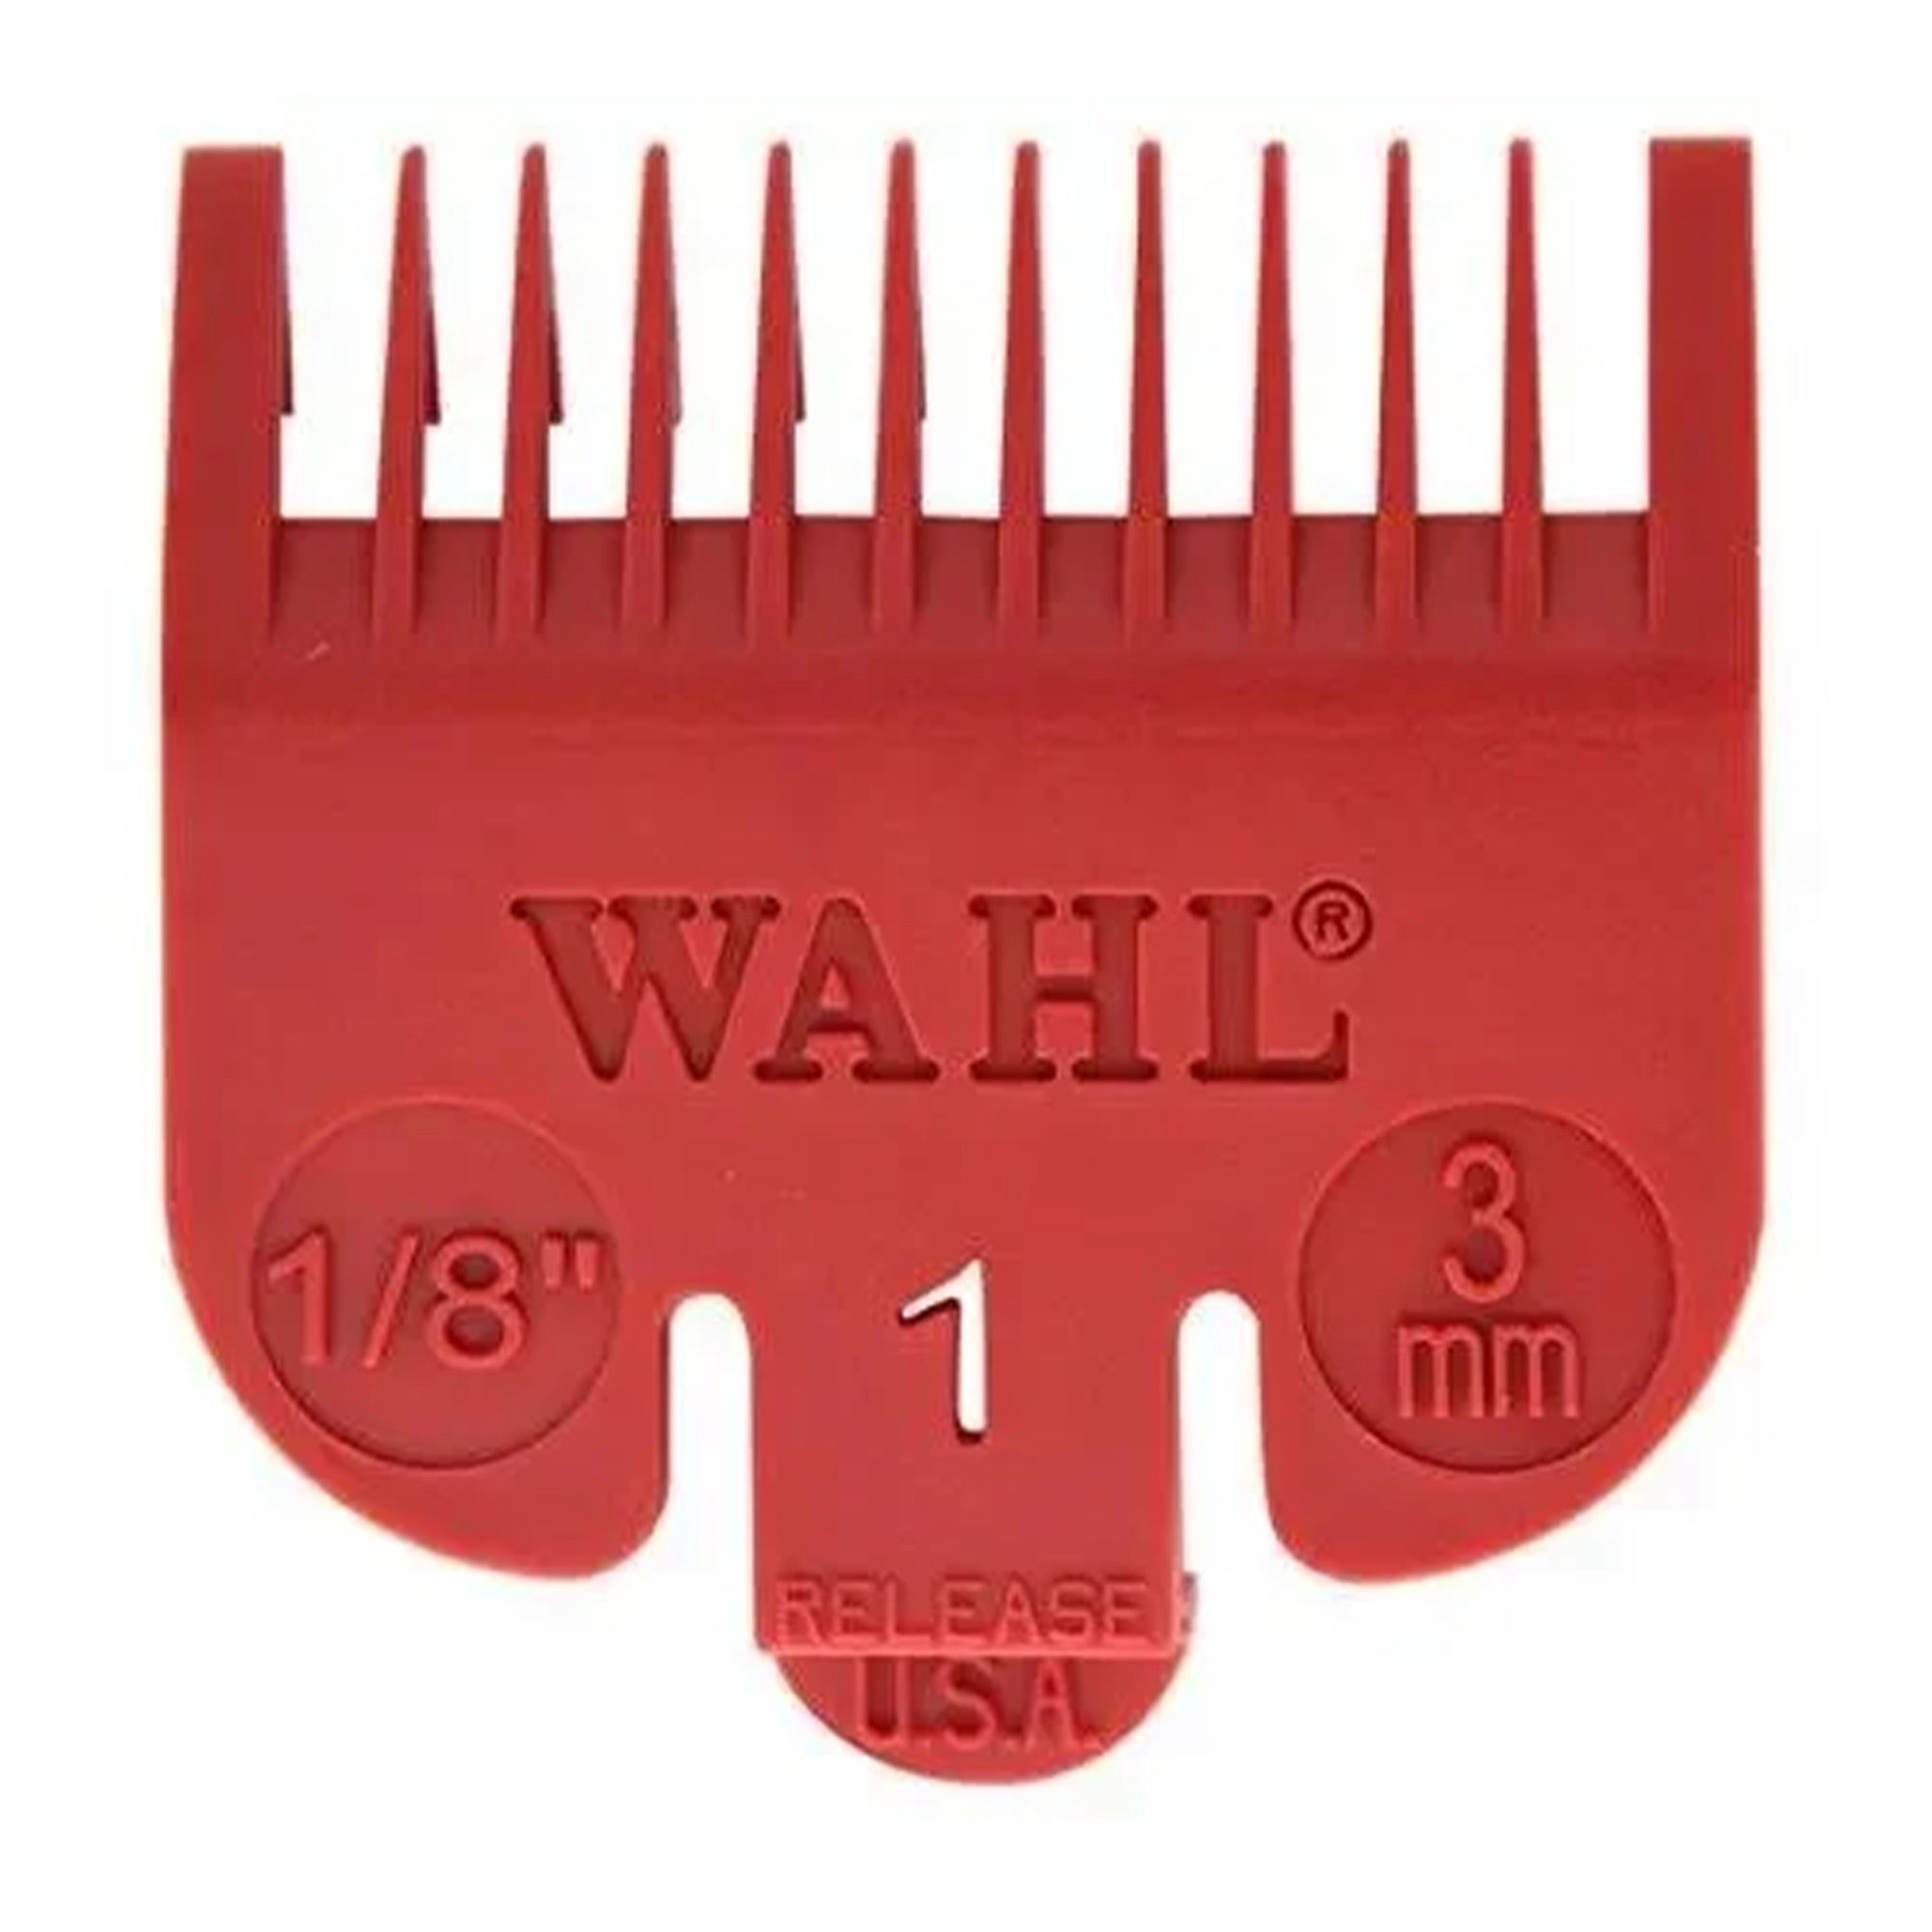 Wahl - No.1 Attachment Comb Guard 3mm Red 3114-2001